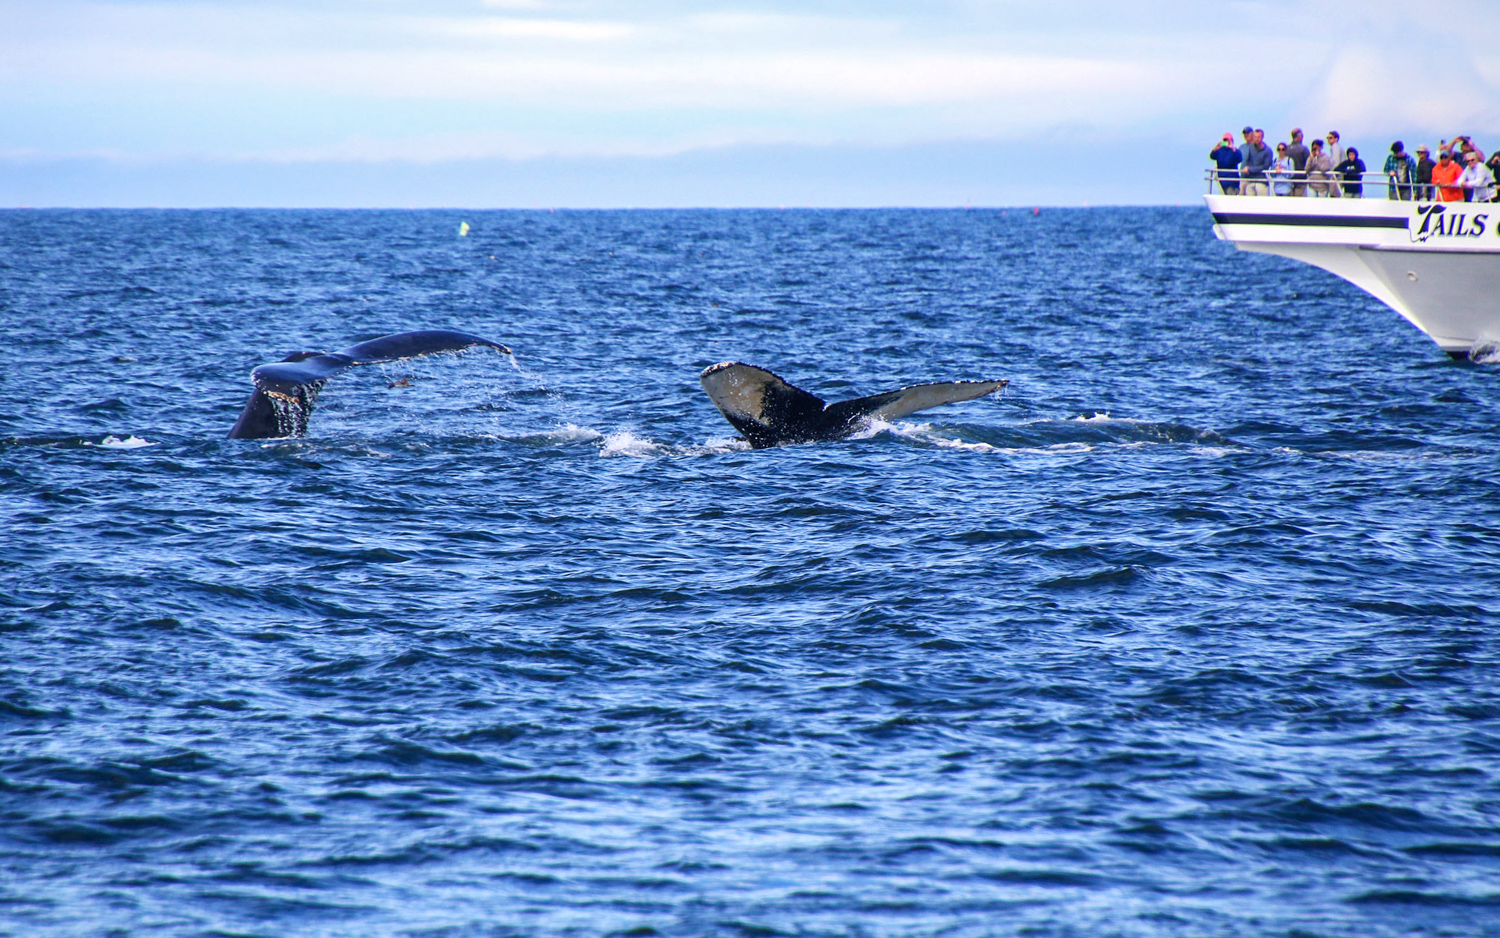 Whale flukes (photo by Kelly Lemons)